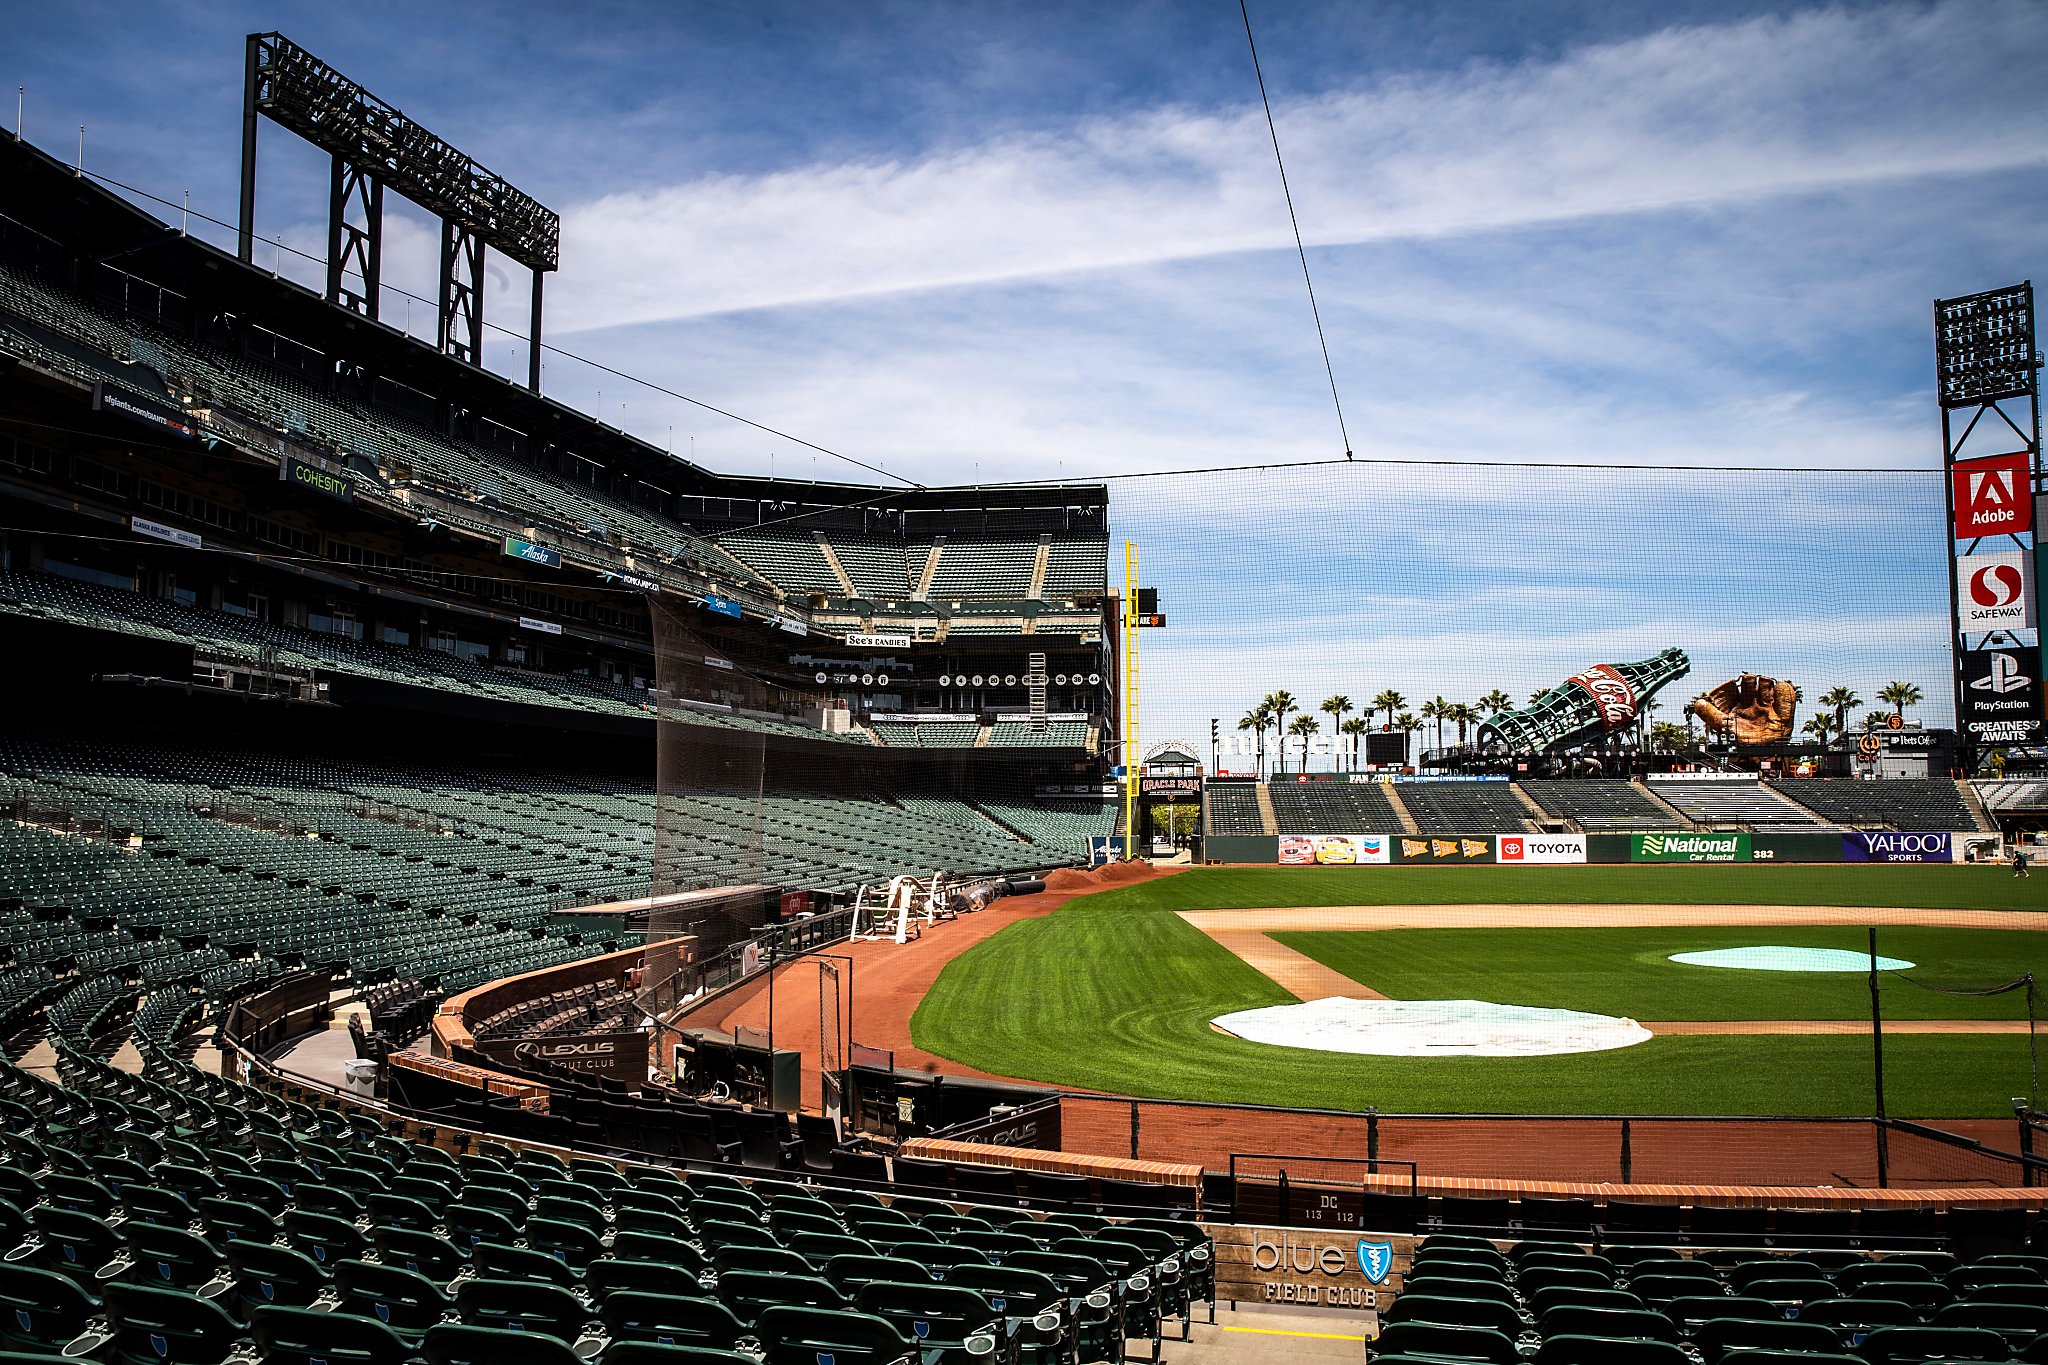 San Francisco Giants' stadium renamed Oracle Park - Sports Illustrated